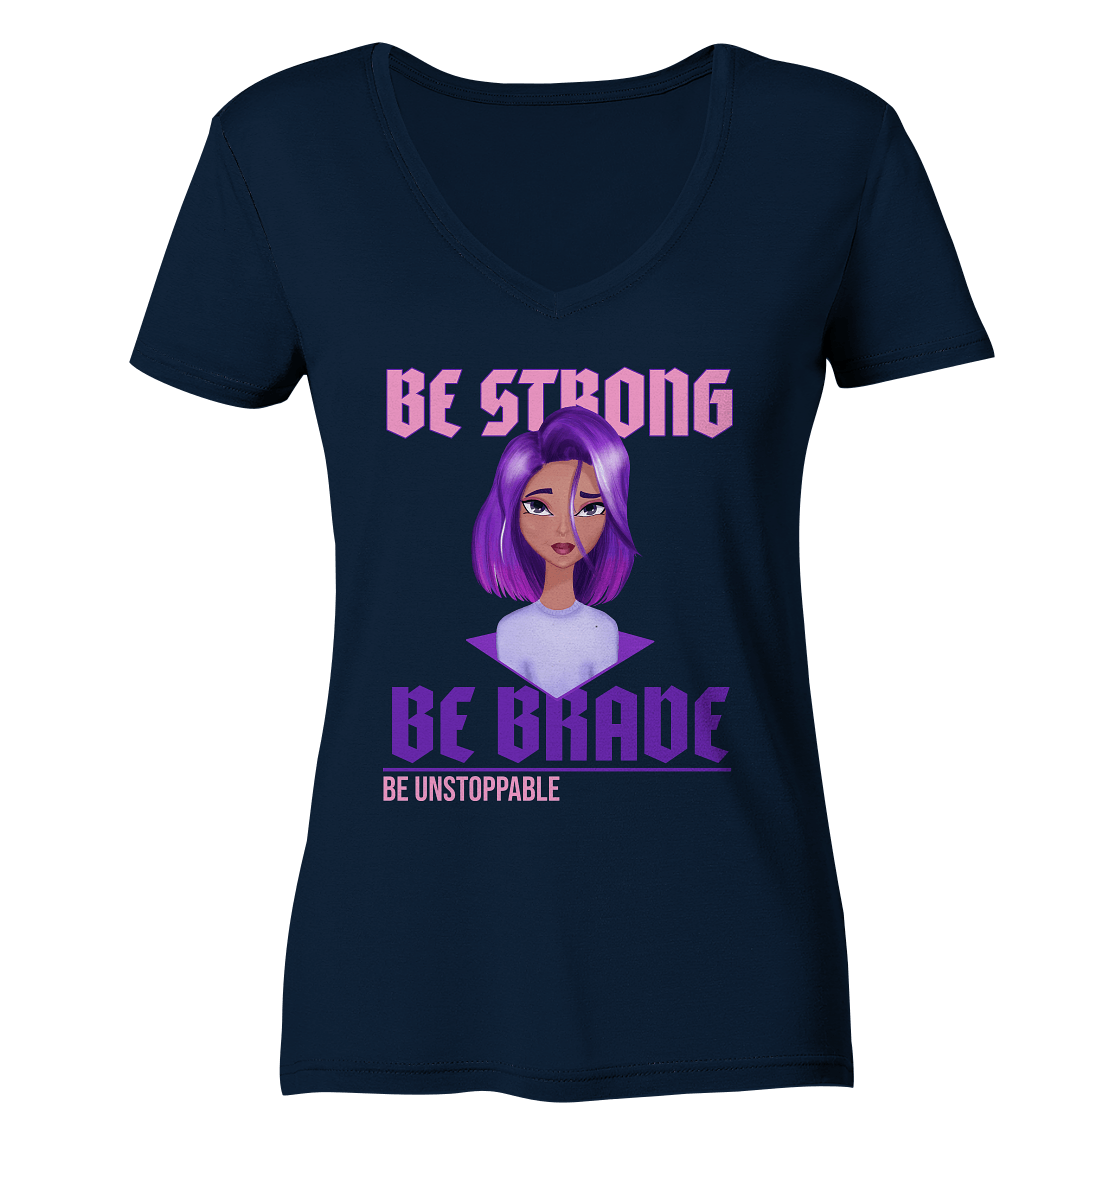 Damen V-Neck Shirt in french navy blau mit handgezeichneten Cartoon  mit lila-violett Ombré Haarfarbe und Beschriftung "be strong be brave be unstoppable" sketch cartoon character Bloominic